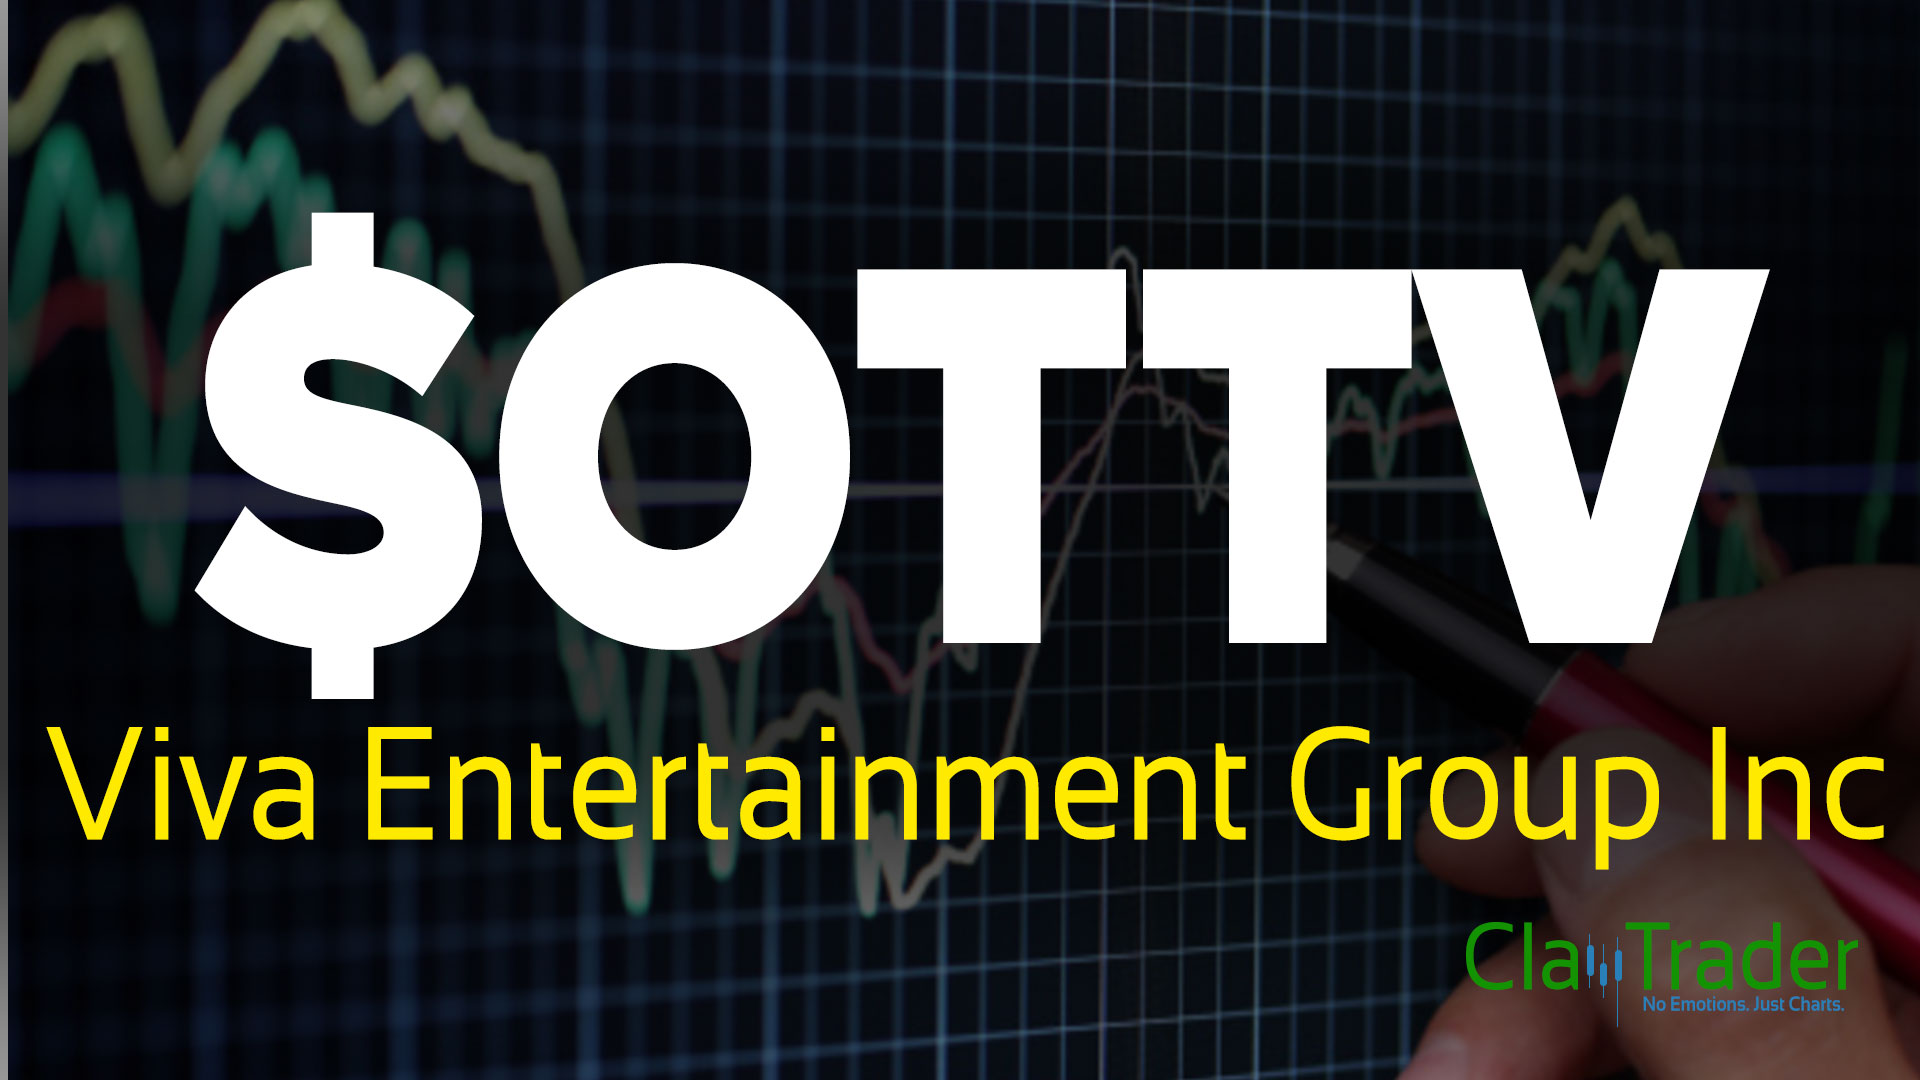 Viva Entertainment Group Inc - $OTTV Stock Chart Technical Analysis